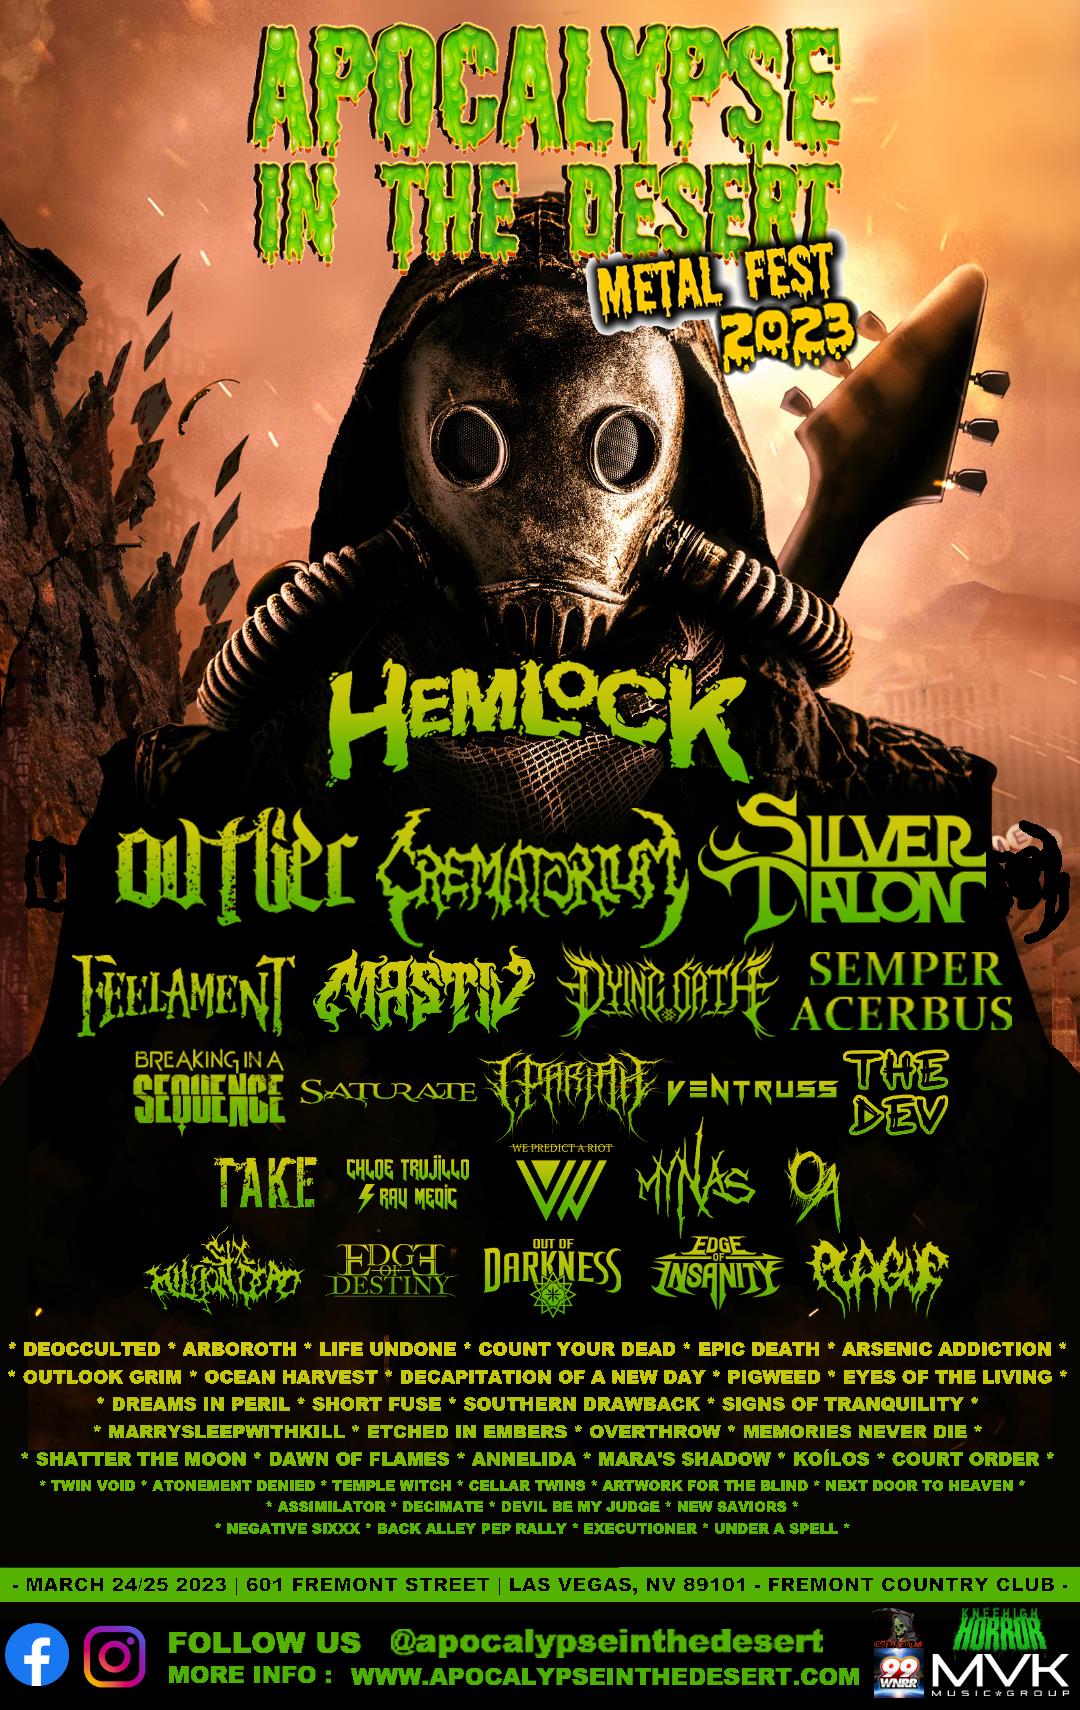 Buy Tickets to Apocalypse in the Desert Metal Fest 2023 in Las Vegas on